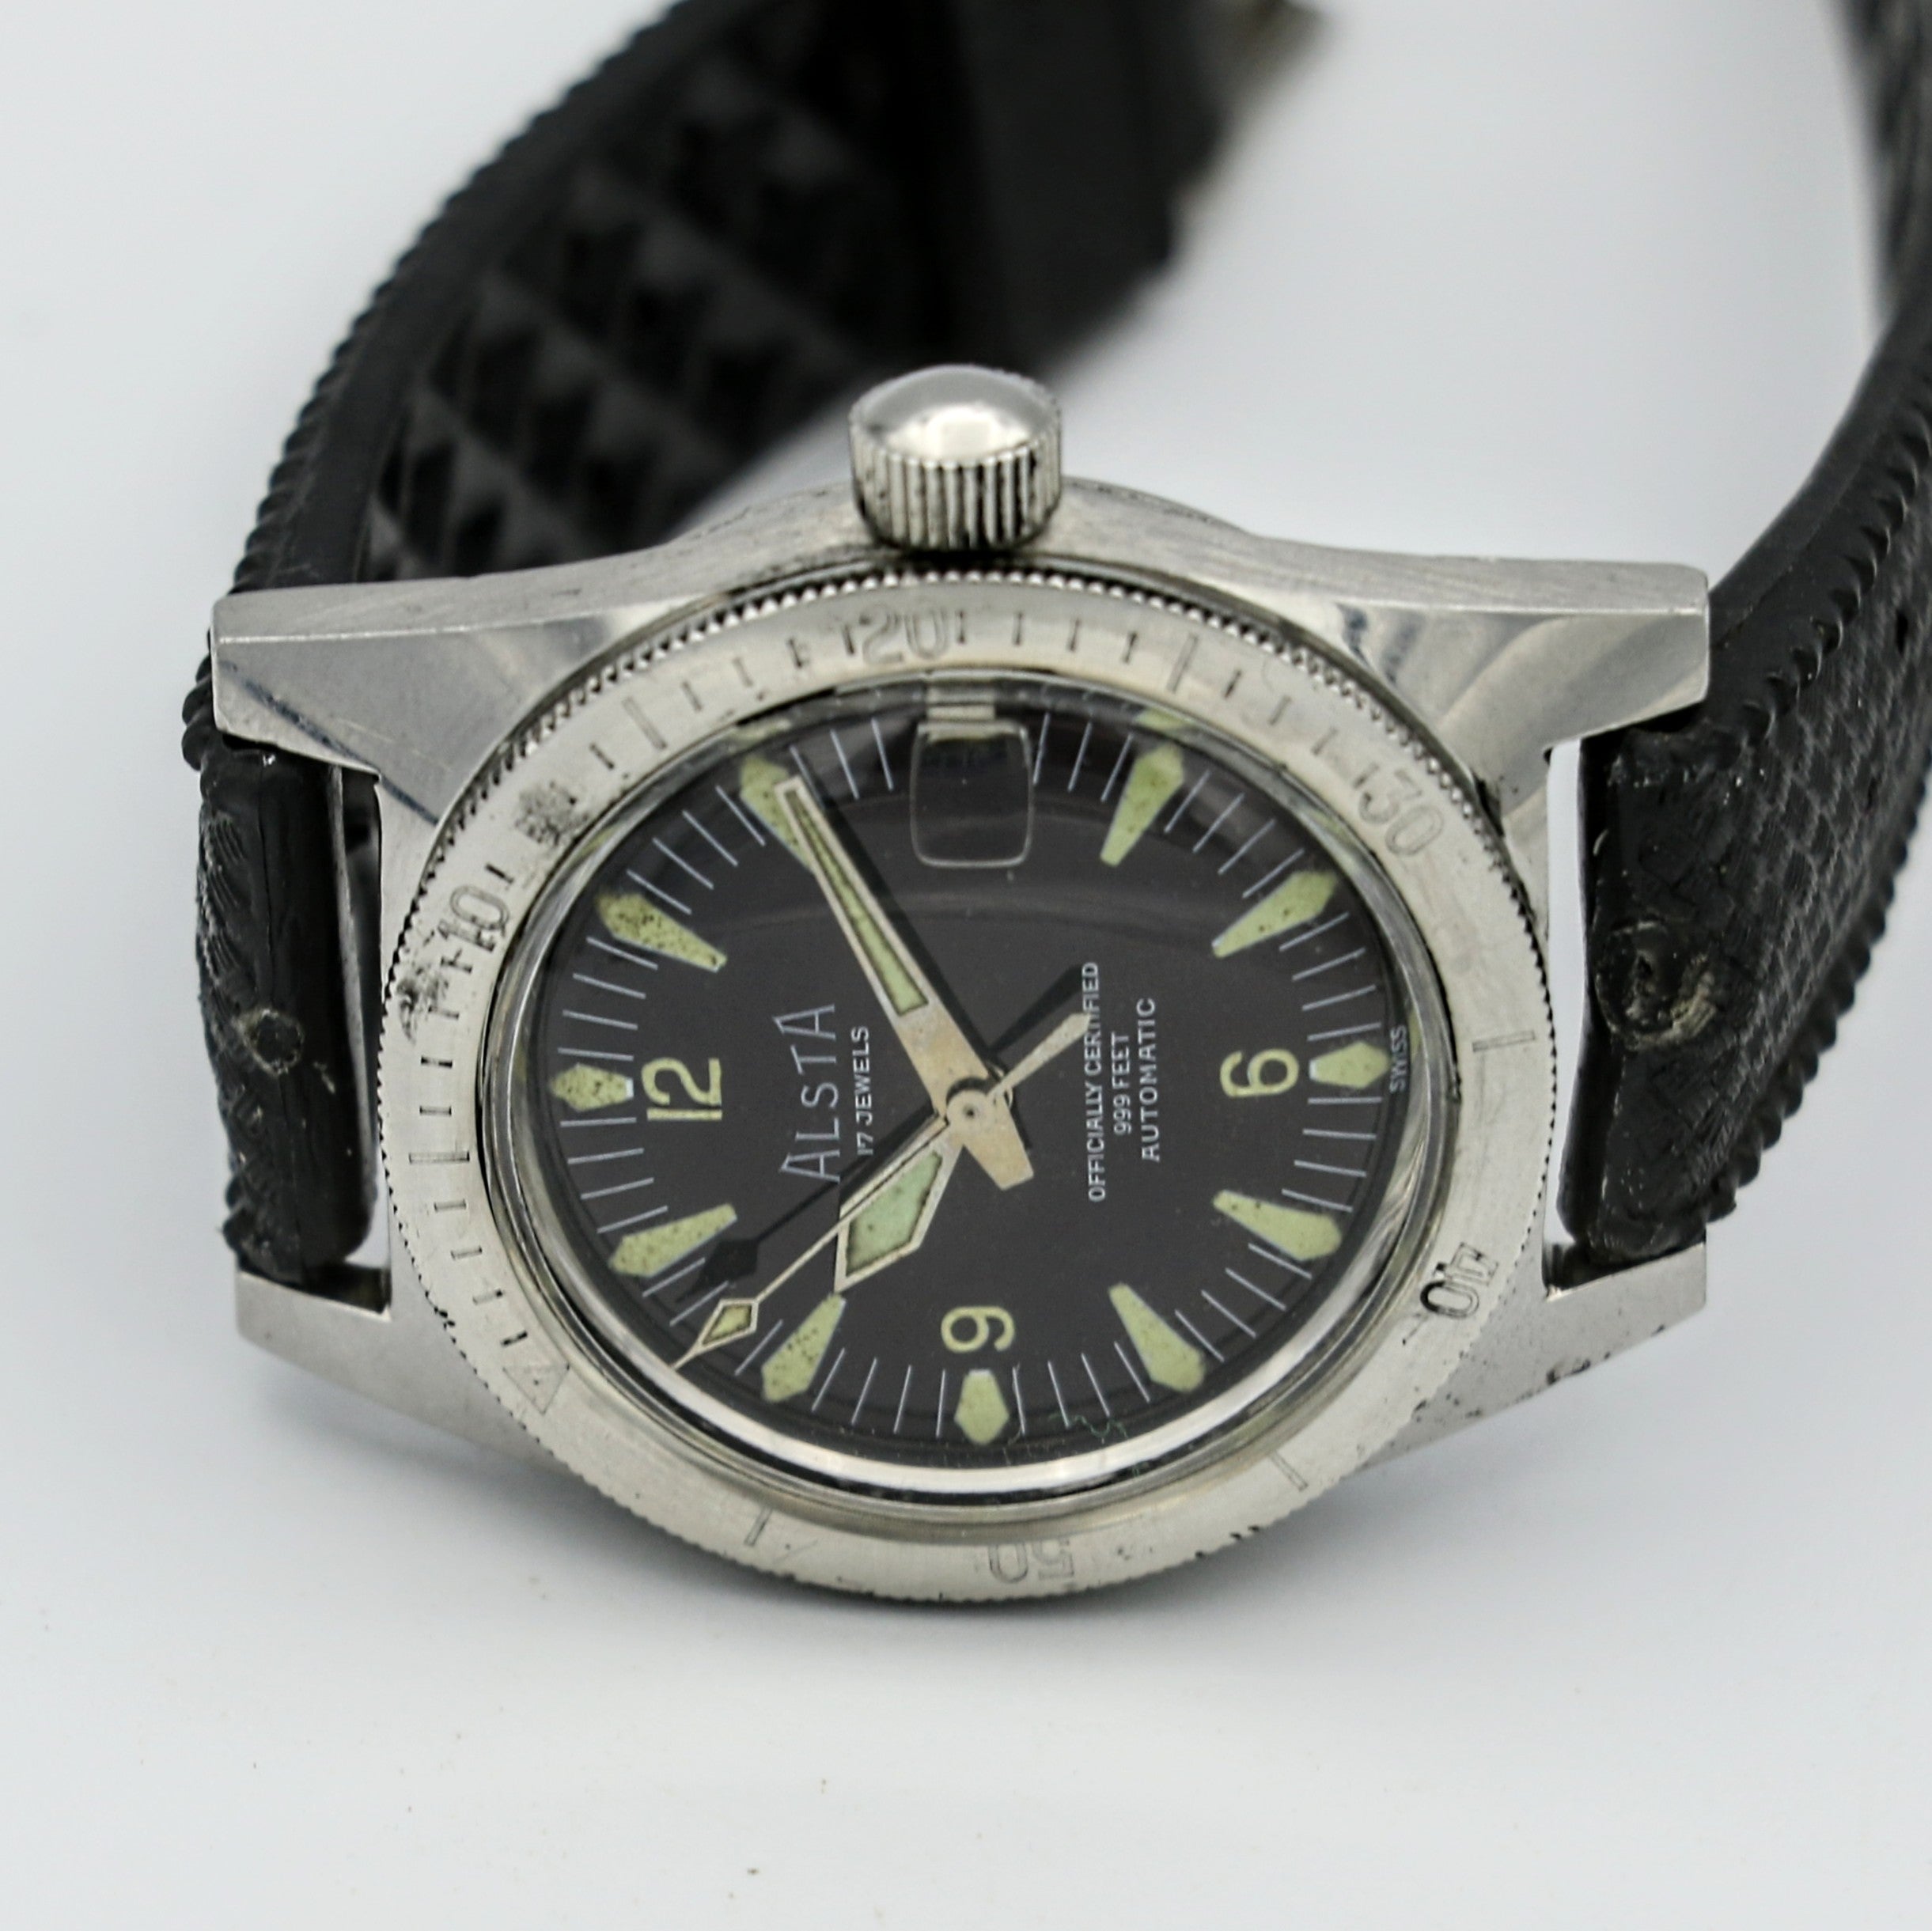 The Original "Jaws" Watch - ALSTA Nautoscaph Dive Automatic Wristwatch 999 Feet